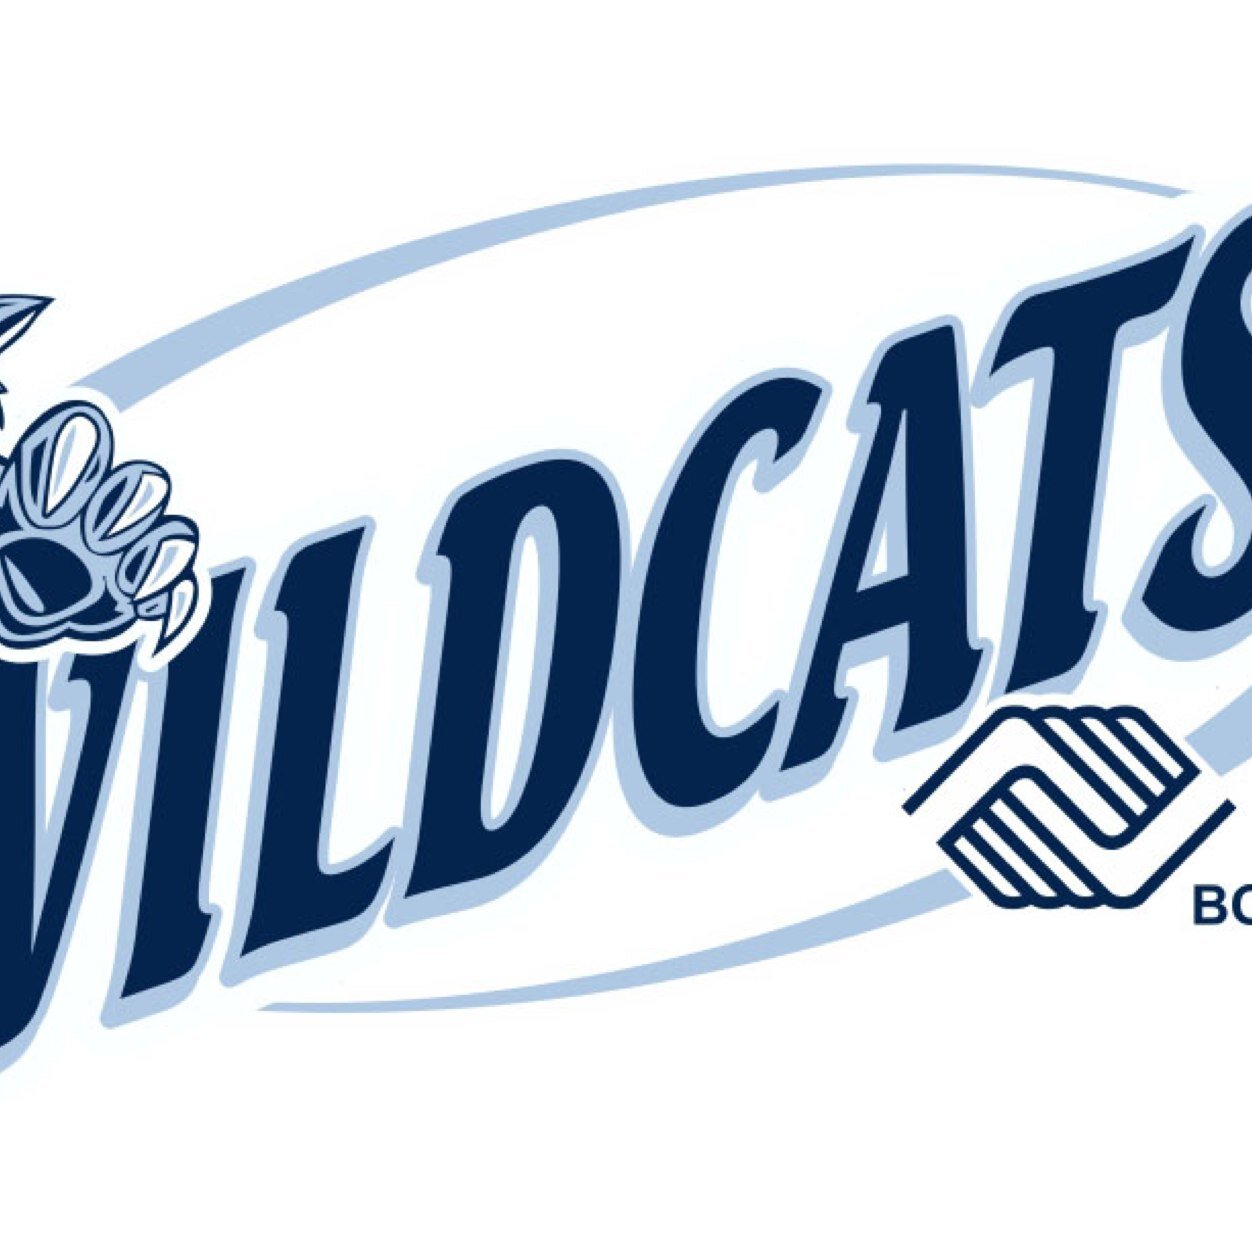 Rockford Wildcats 17U Boys Team